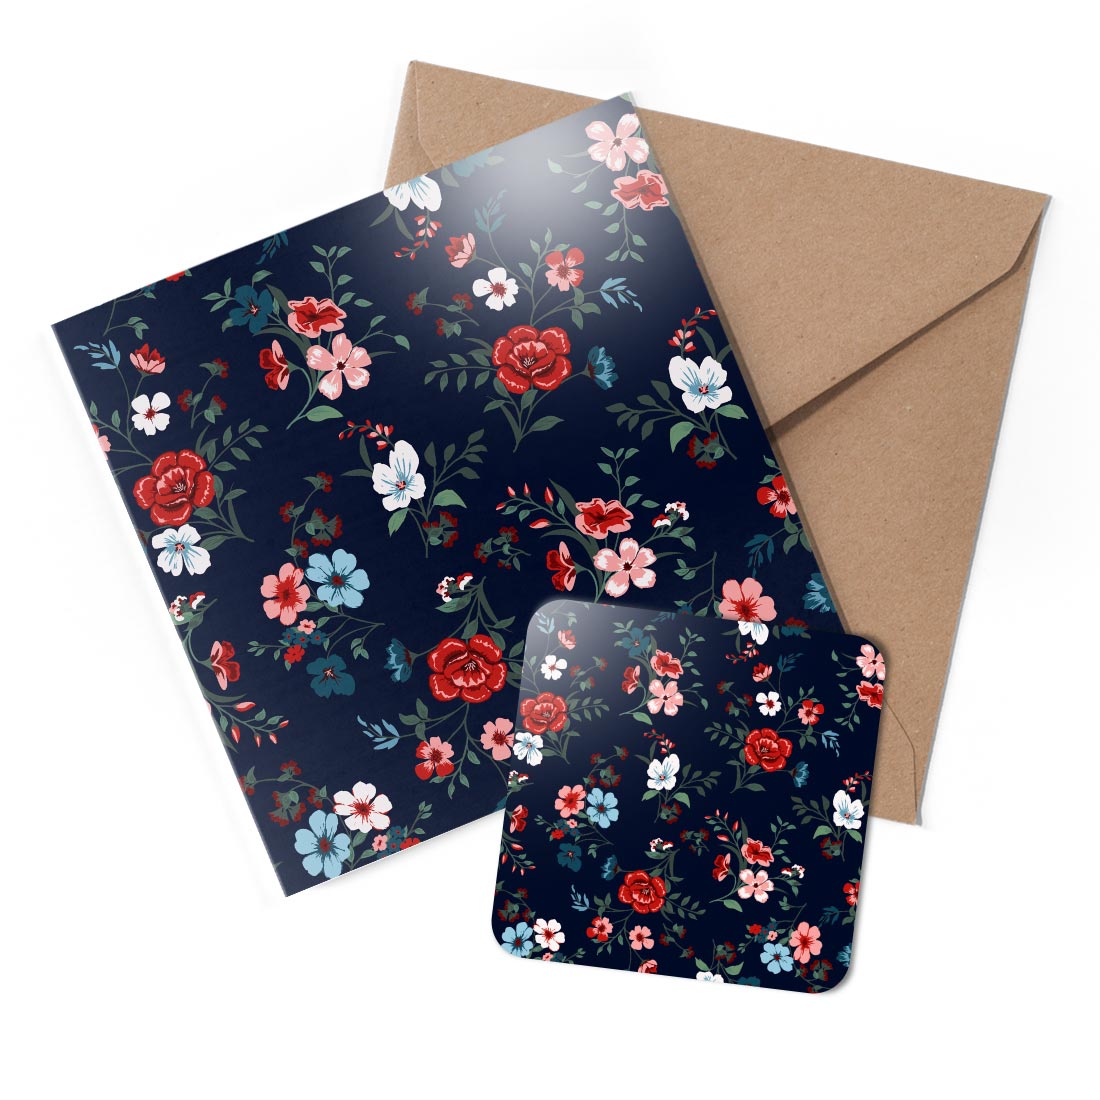 1 x Greeting Card & Coaster Set - Vintage Floral Pattern Flowers #52365